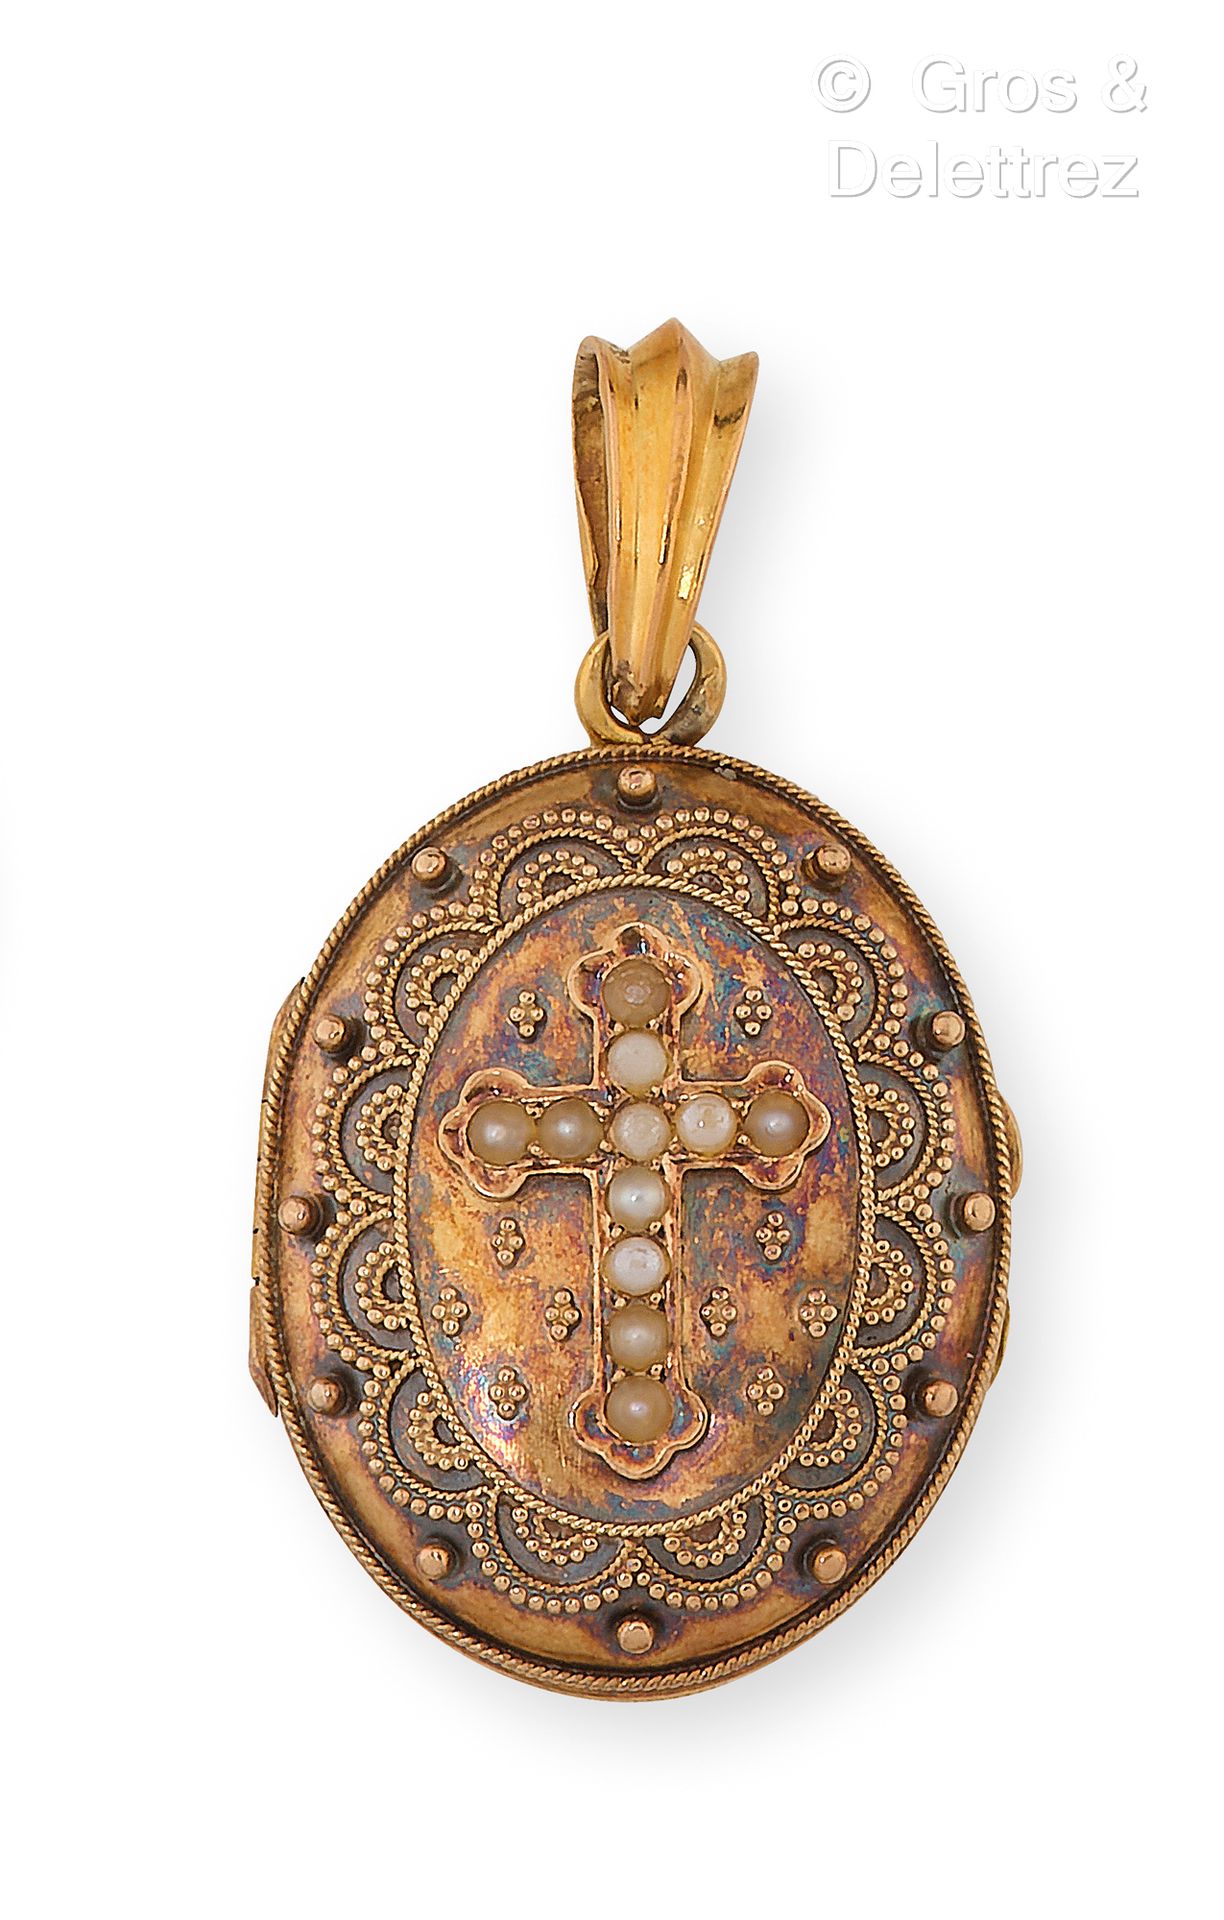 Null 黄金 "Porte-souvenir "吊坠，十字架上镶嵌着精致的珍珠，周围是多棱镜珍珠。长度：3.2厘米。毛重：12.1克。